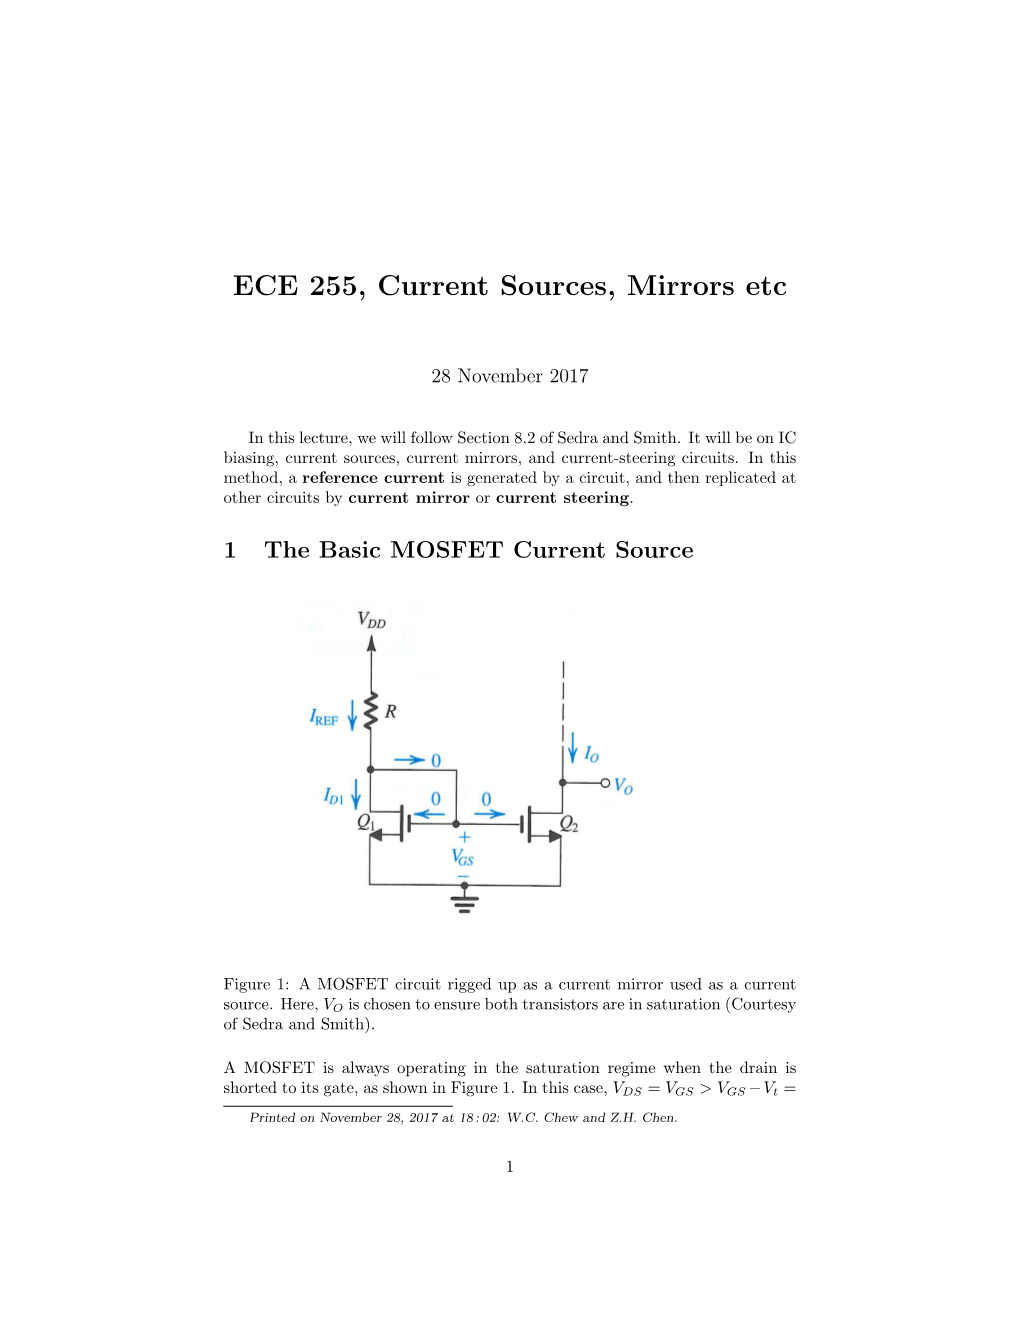 ECE 255, Current Sources, Mirrors Etc